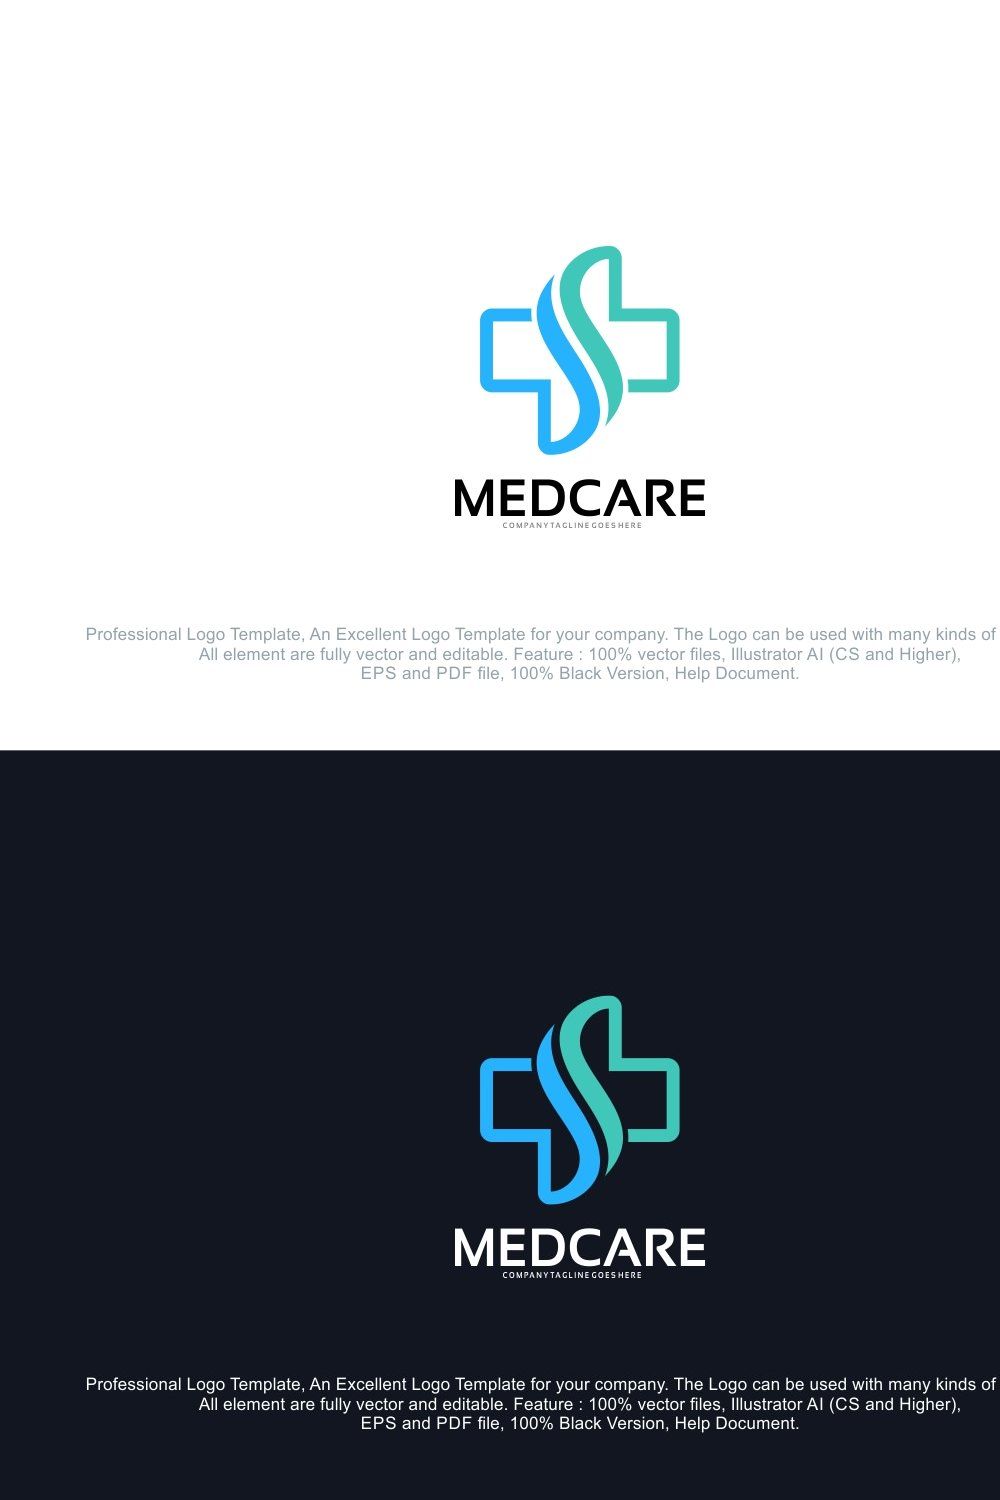 Medical HealthCare - Letter S Logo pinterest preview image.